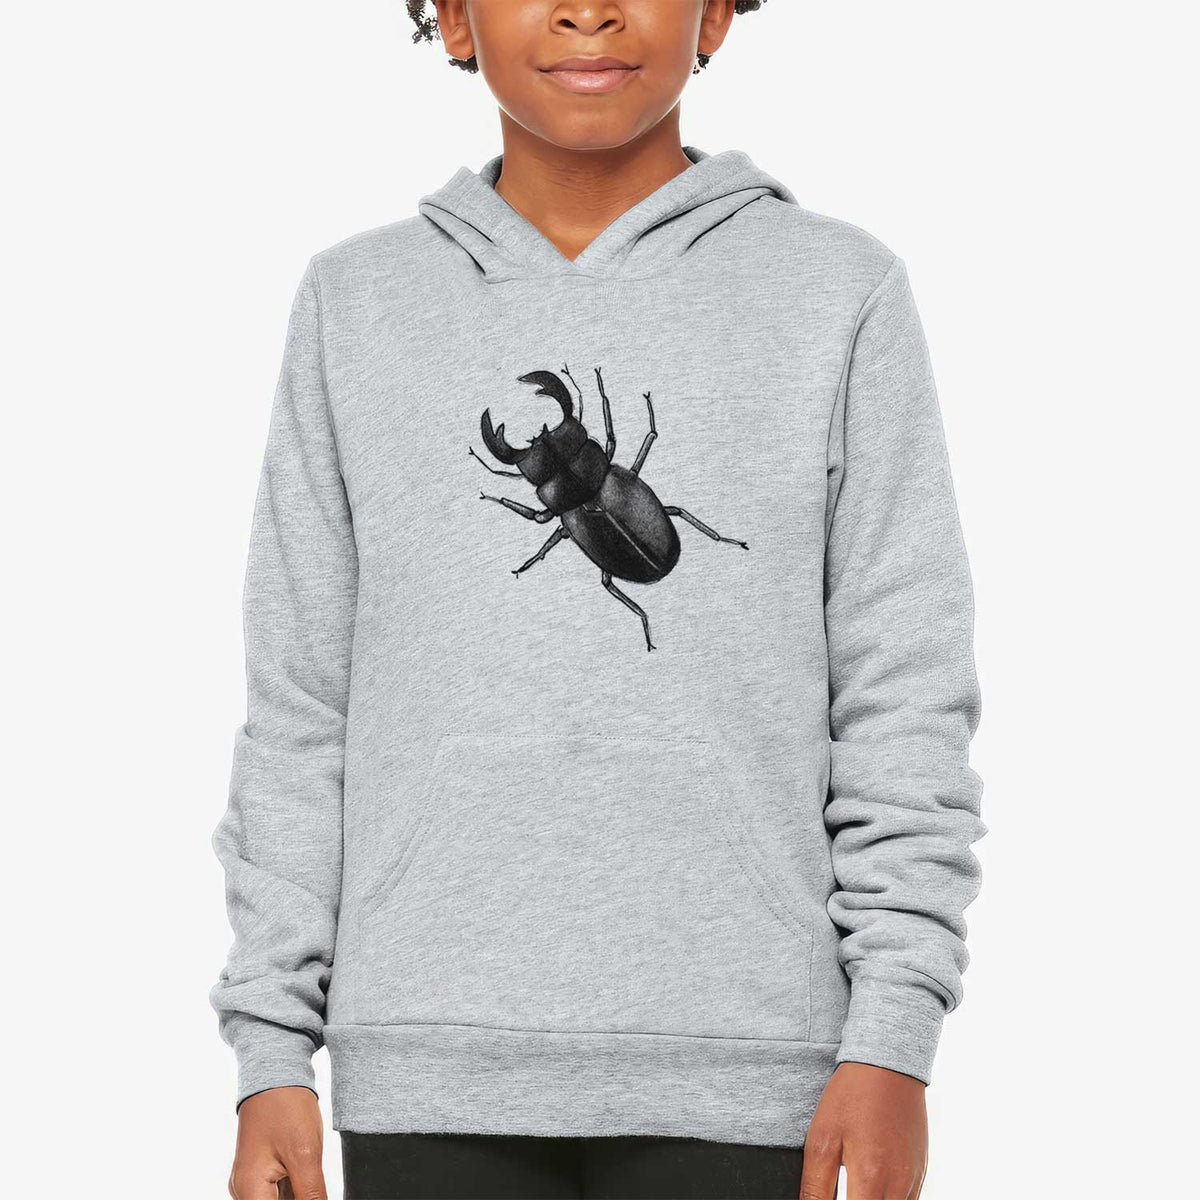 Dorcus titanus - Giant Stag Beetle - Youth Hoodie Sweatshirt